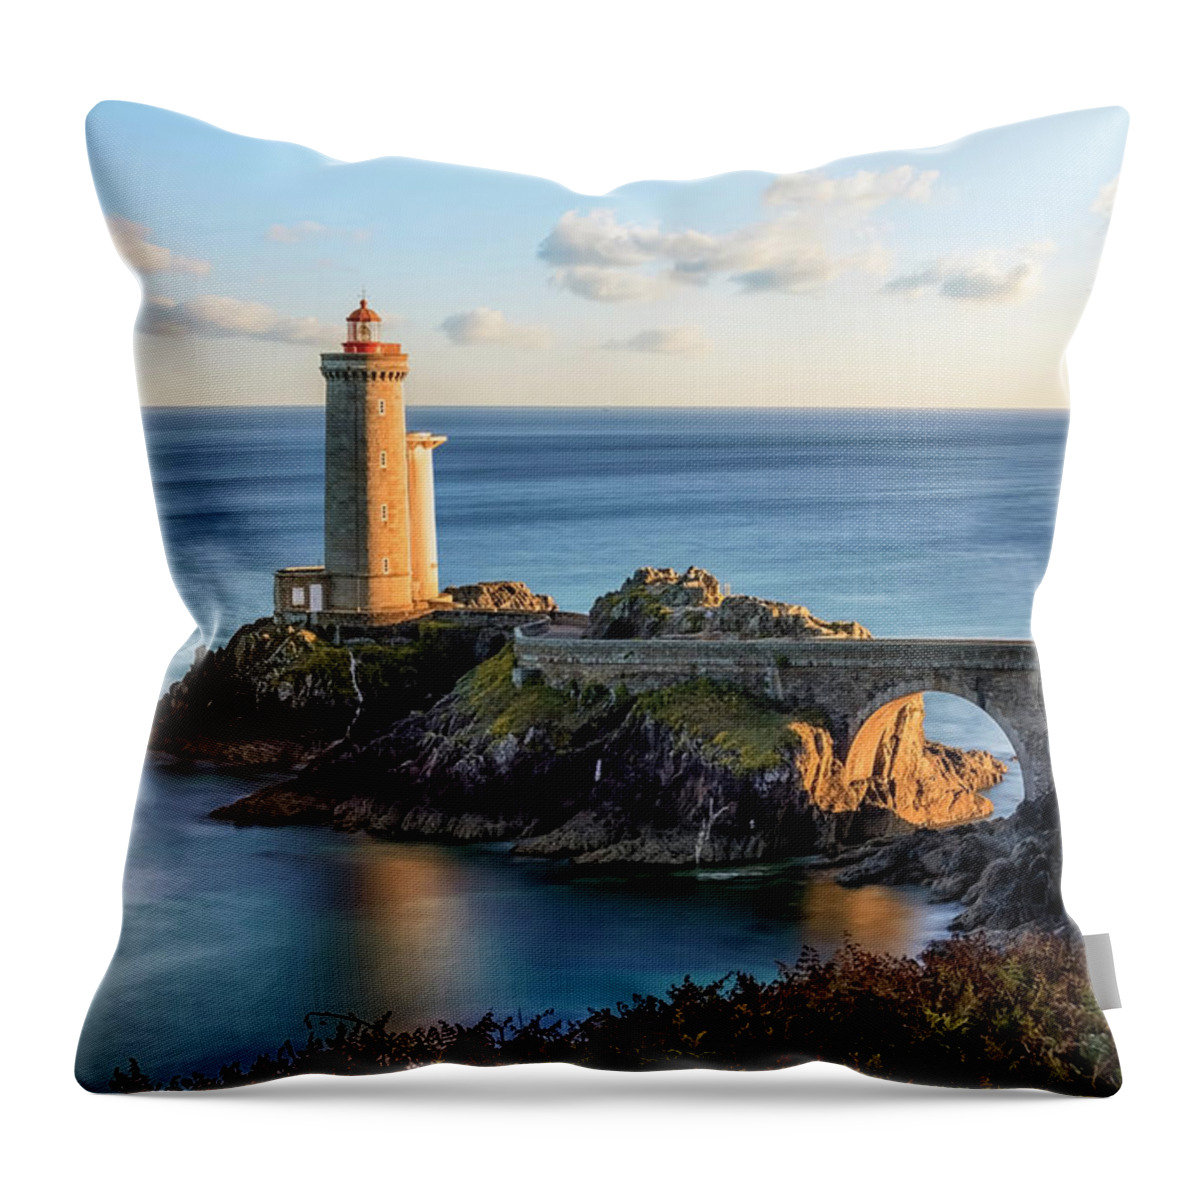 Lighthouse Throw Pillow featuring the photograph Petit Minou by Manjik Pictures